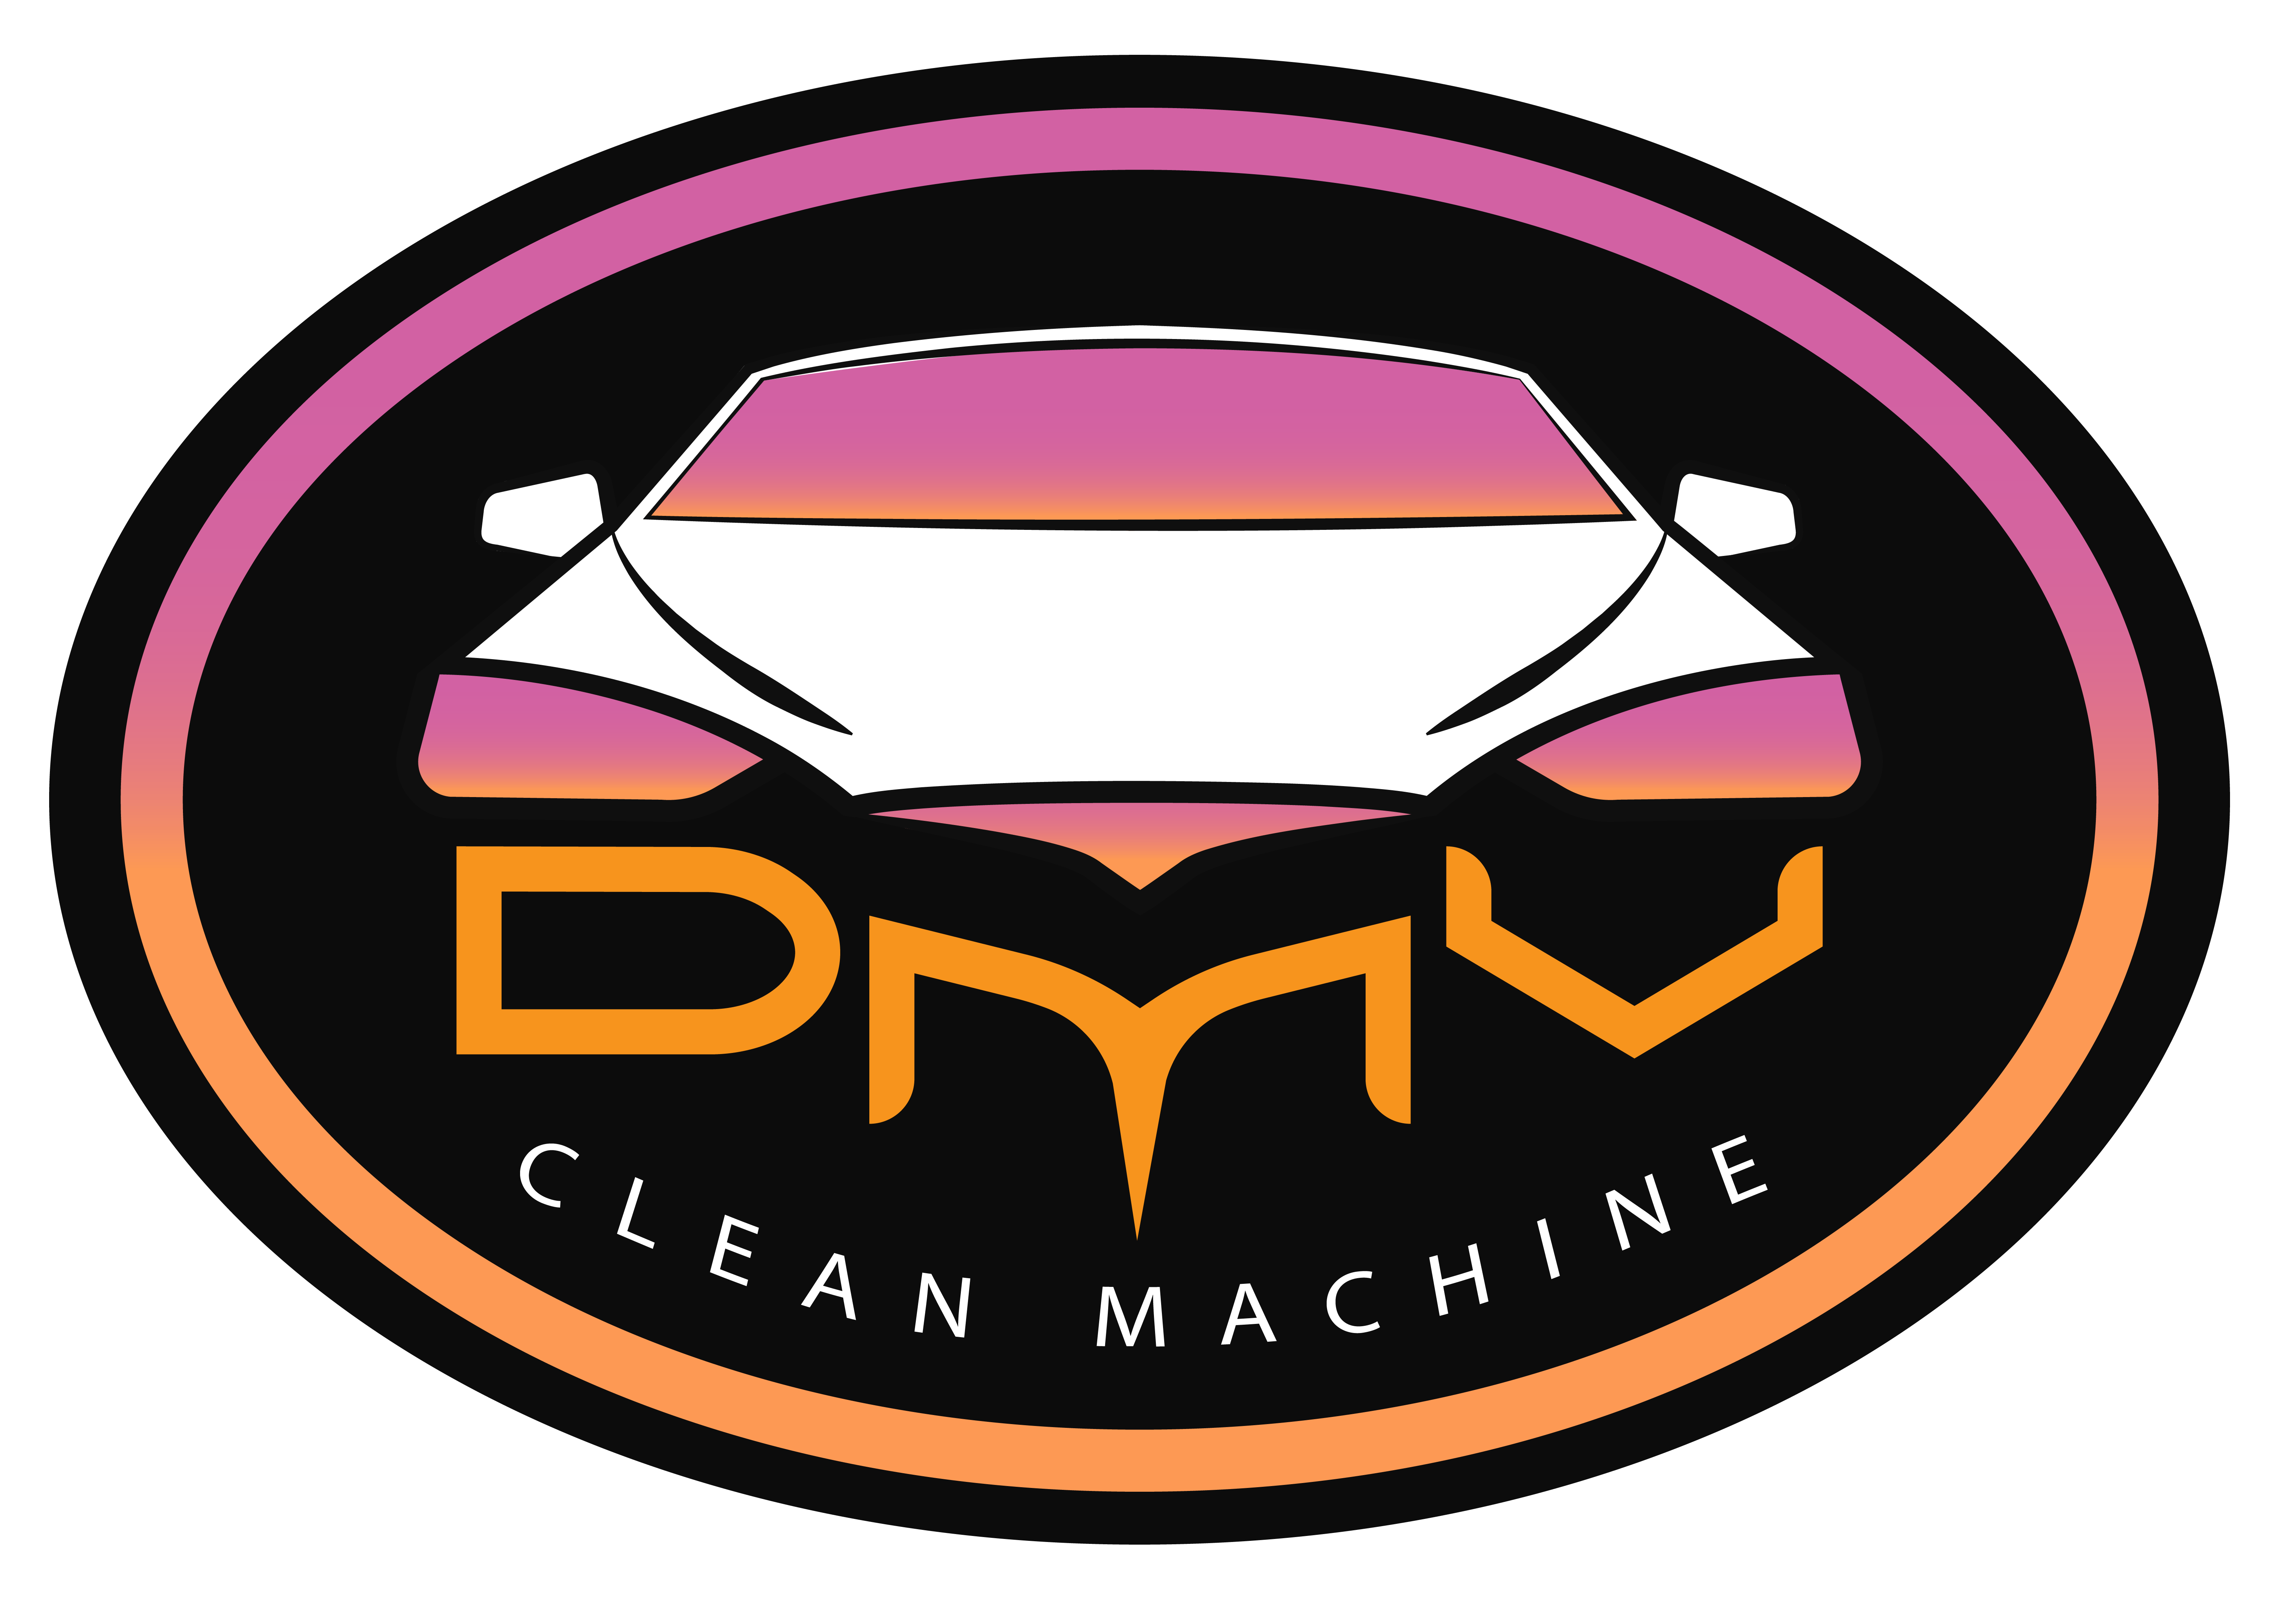 DMV Clean Machine - Car Detailing Services Arlington VA